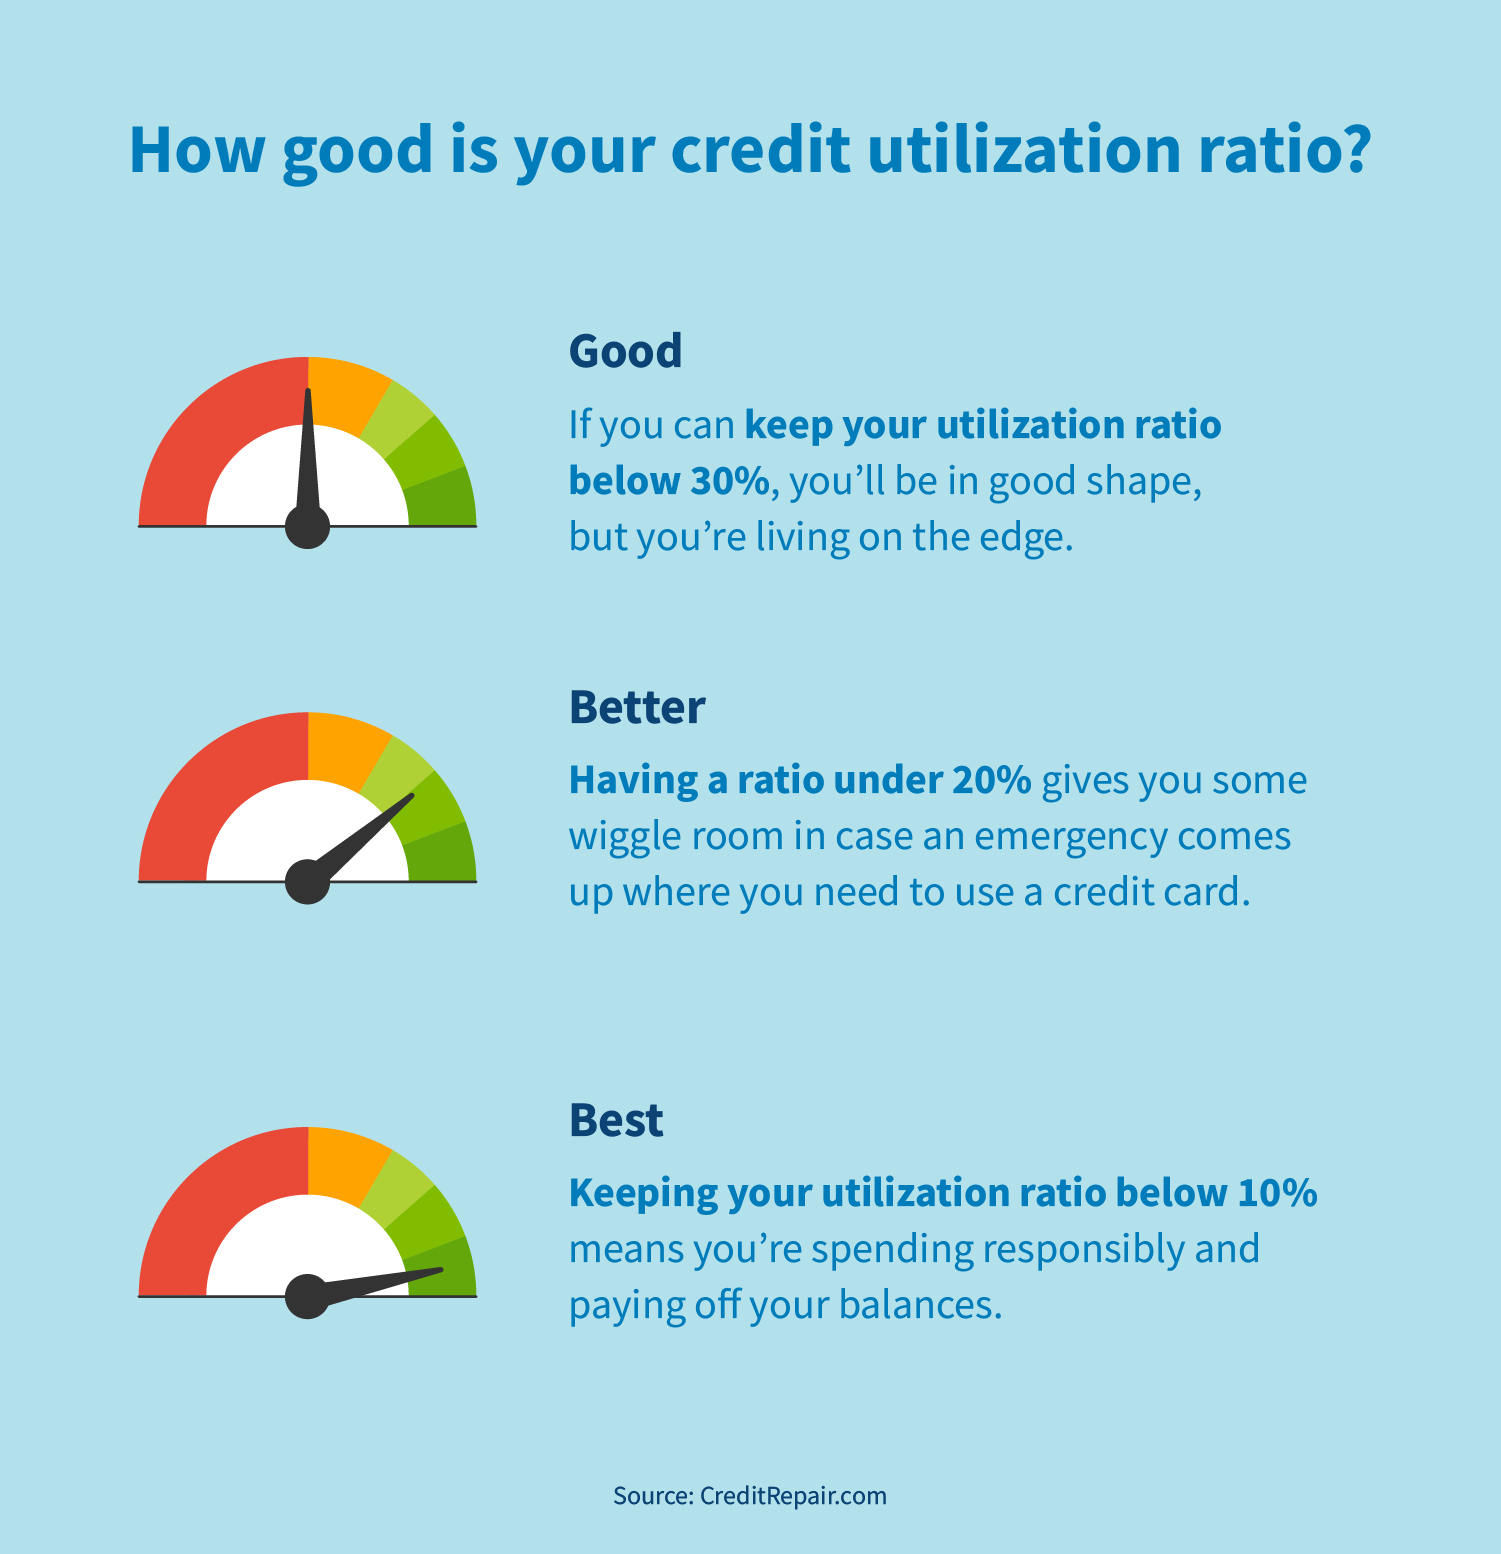 Improved credit utilization ratio